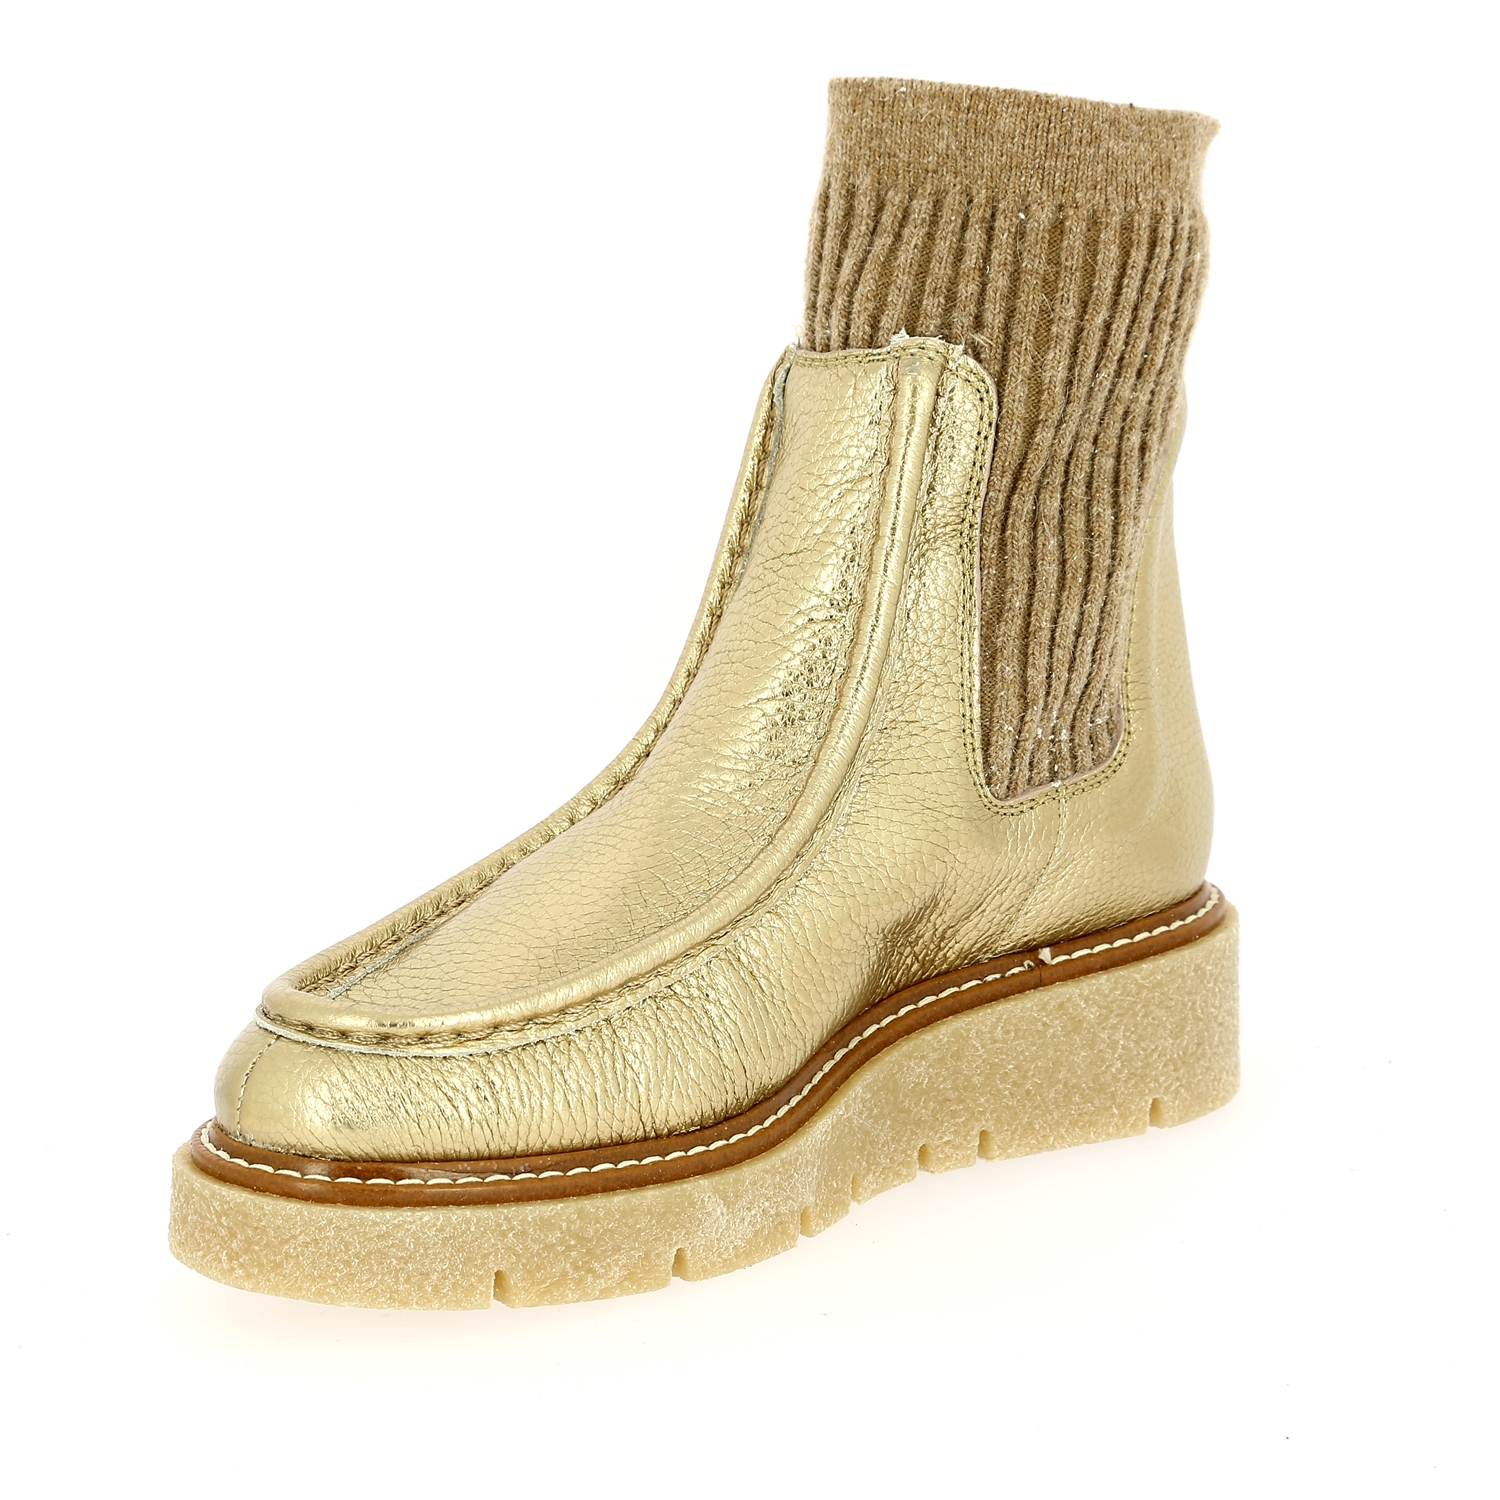 Miralles Boots goud